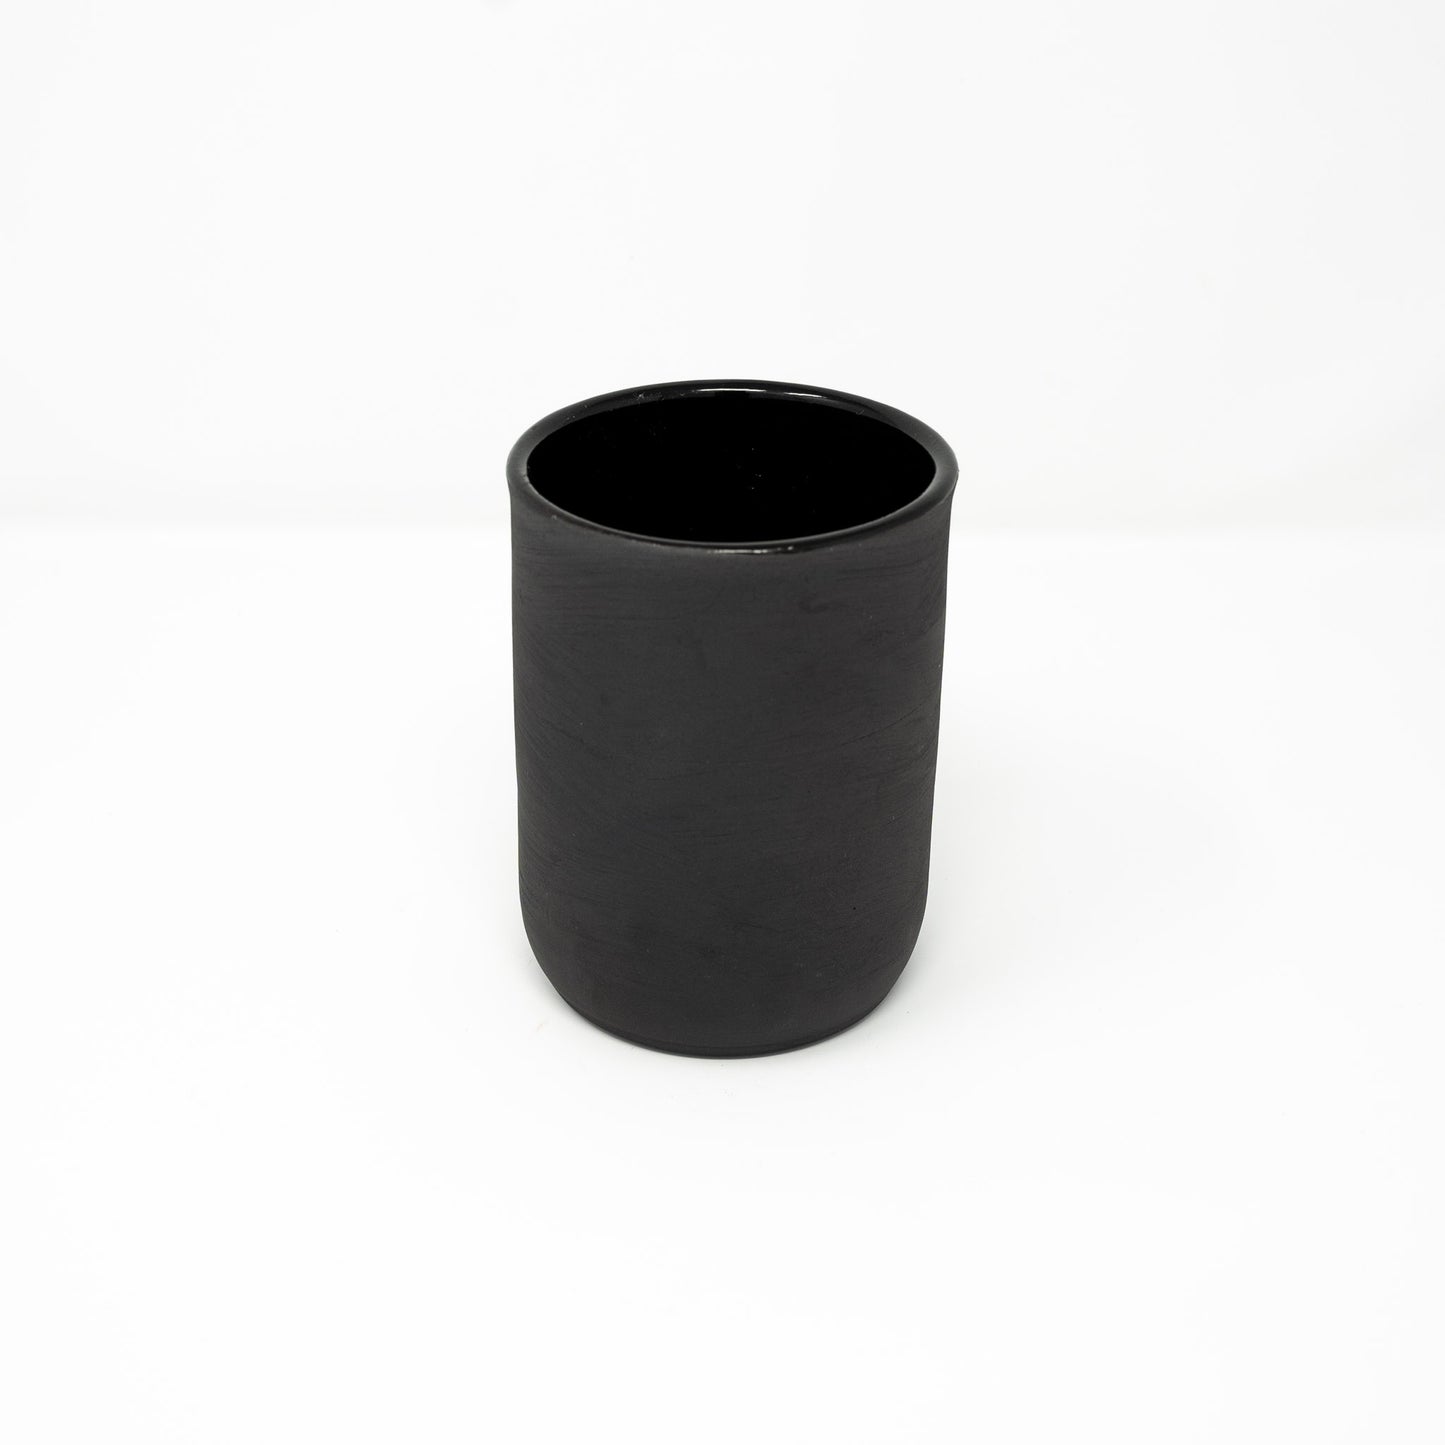 Obsidian vases